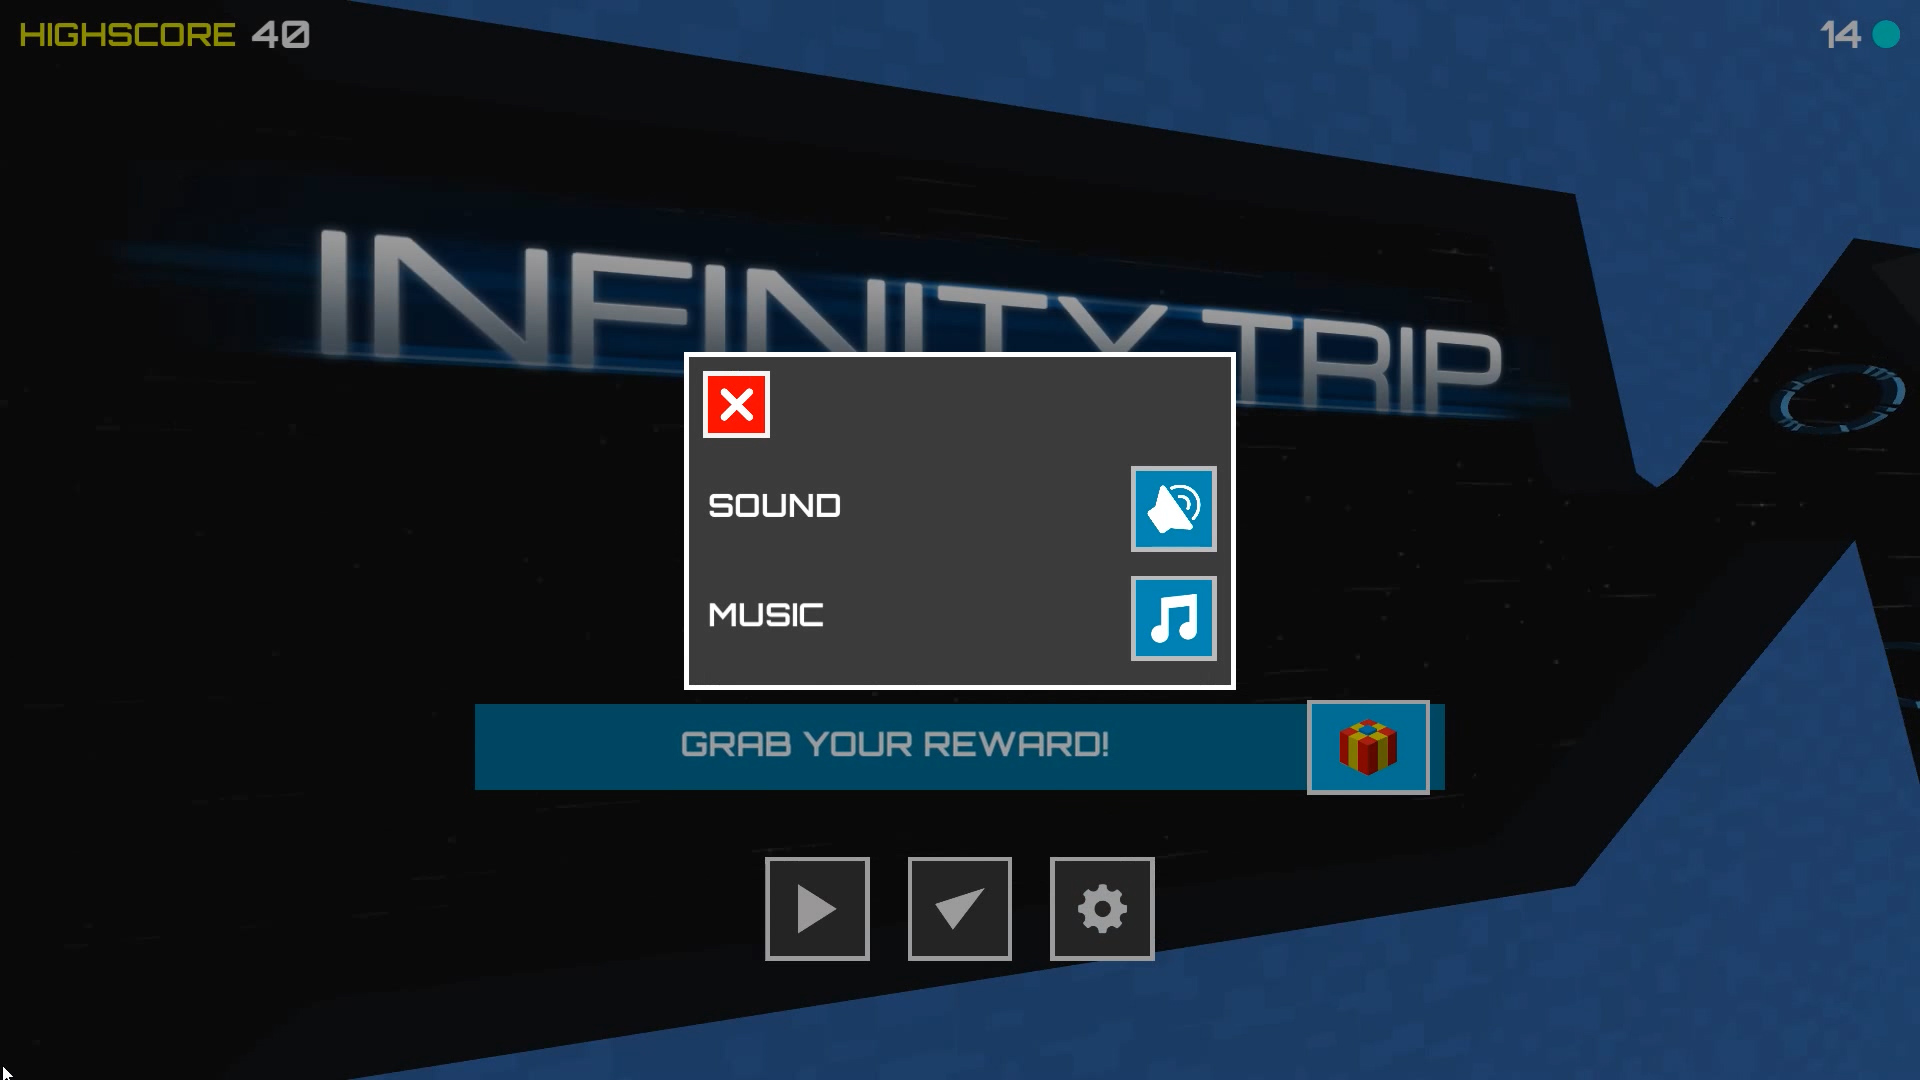 Infinity Trip screenshot